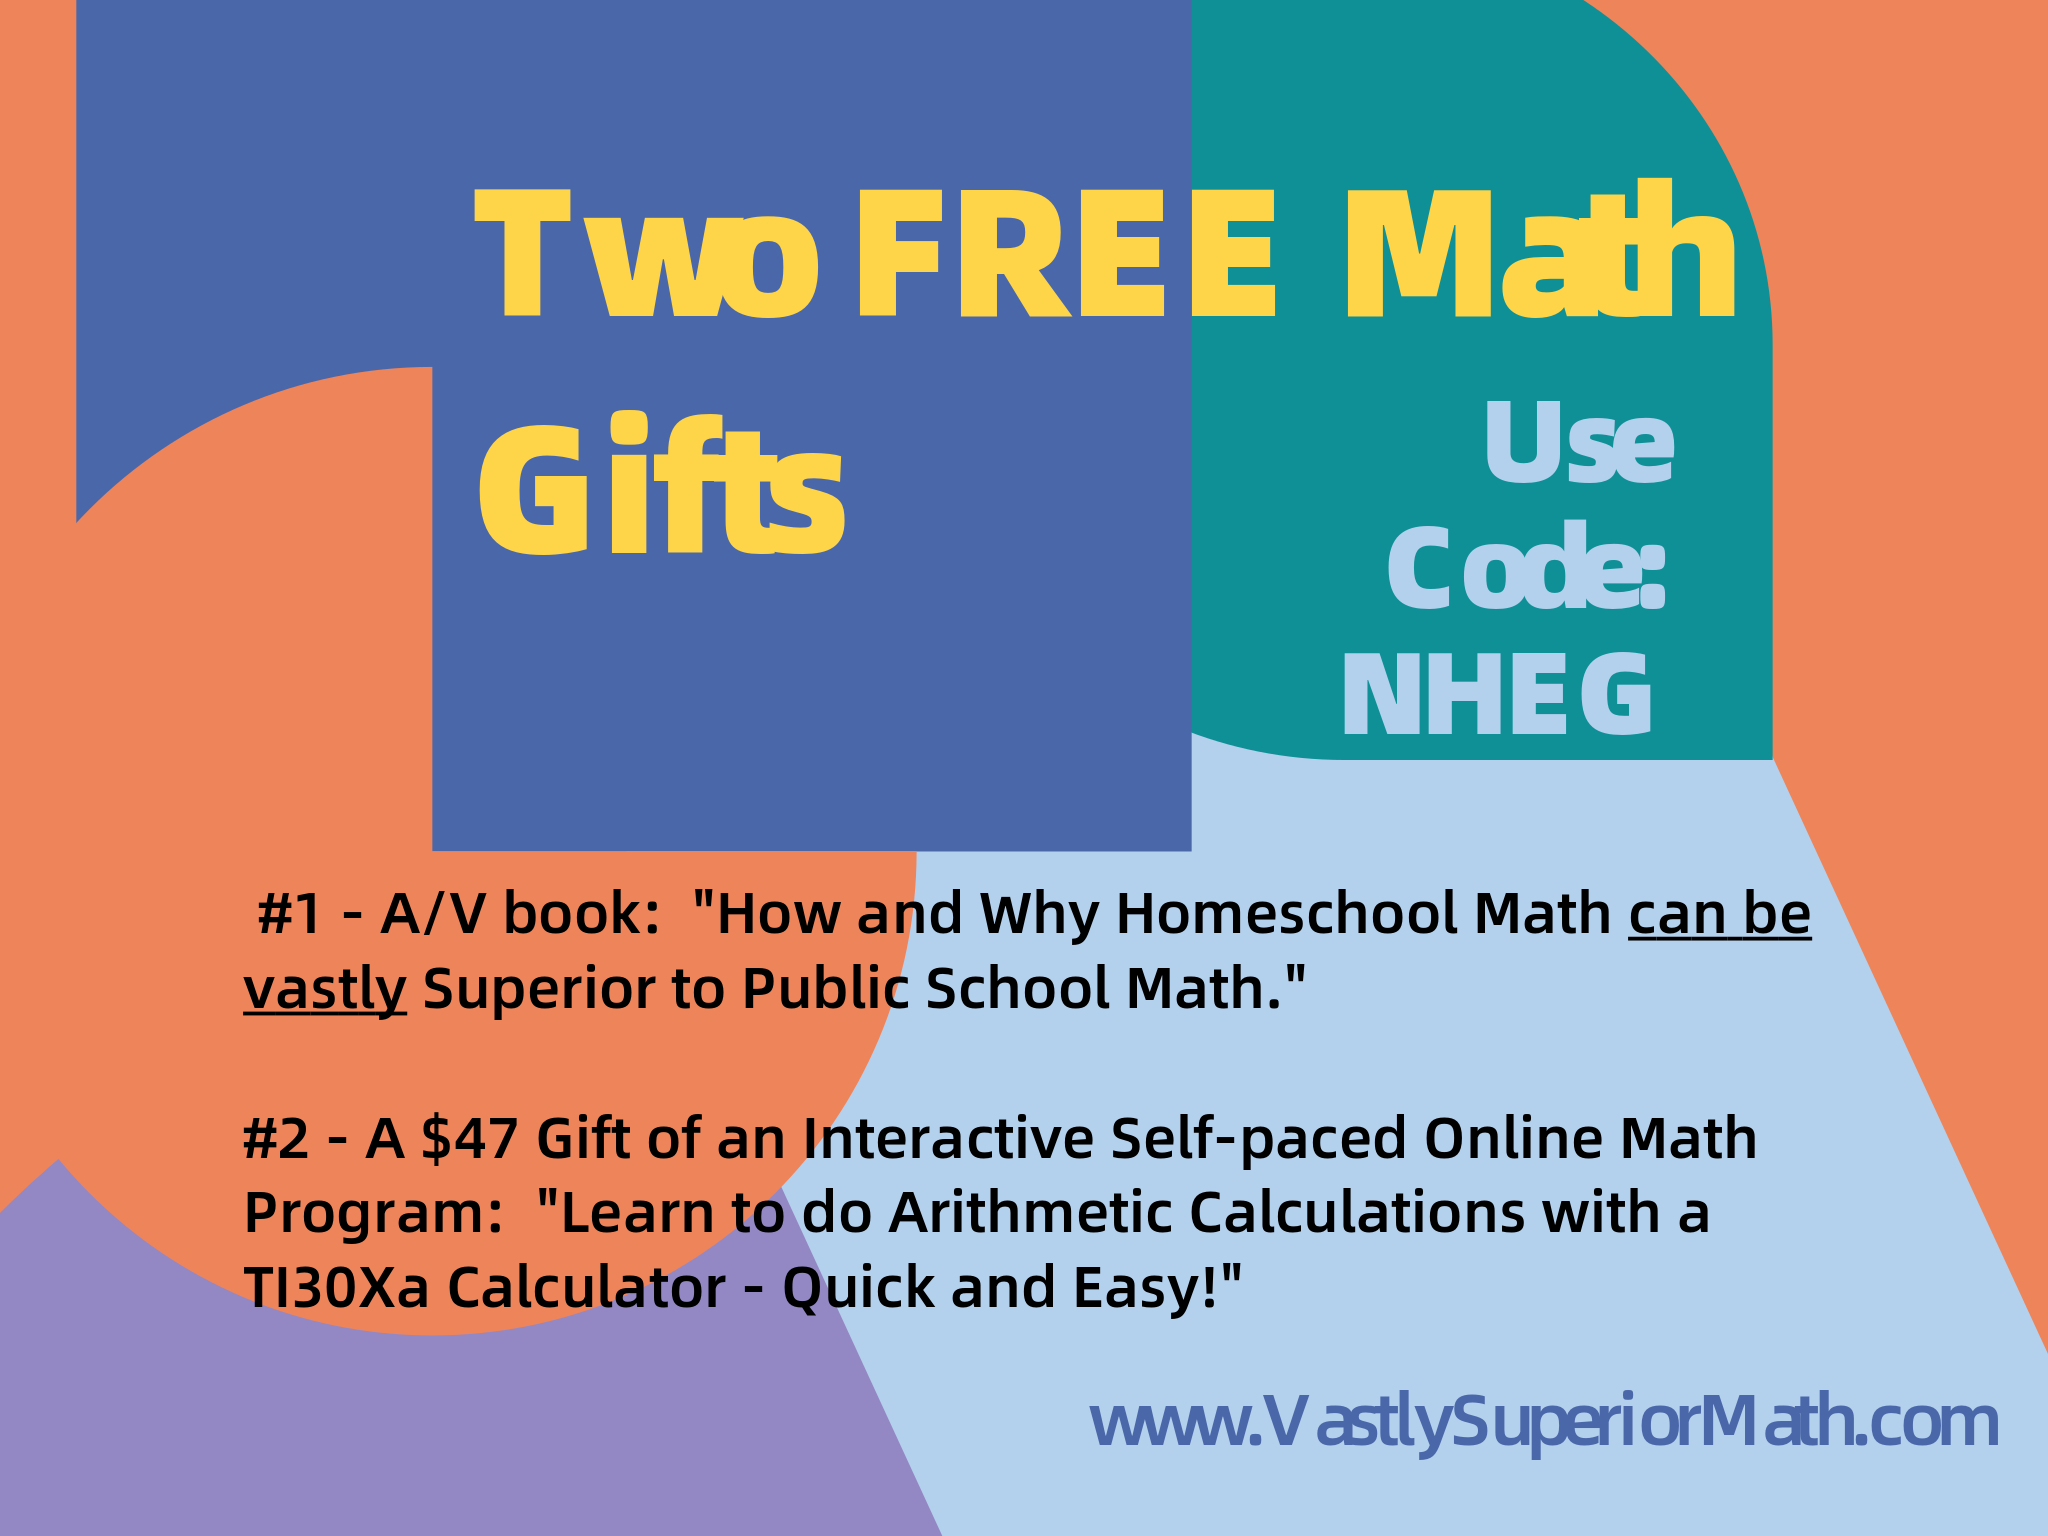 Vastly Superior Math Free Math Class Ad